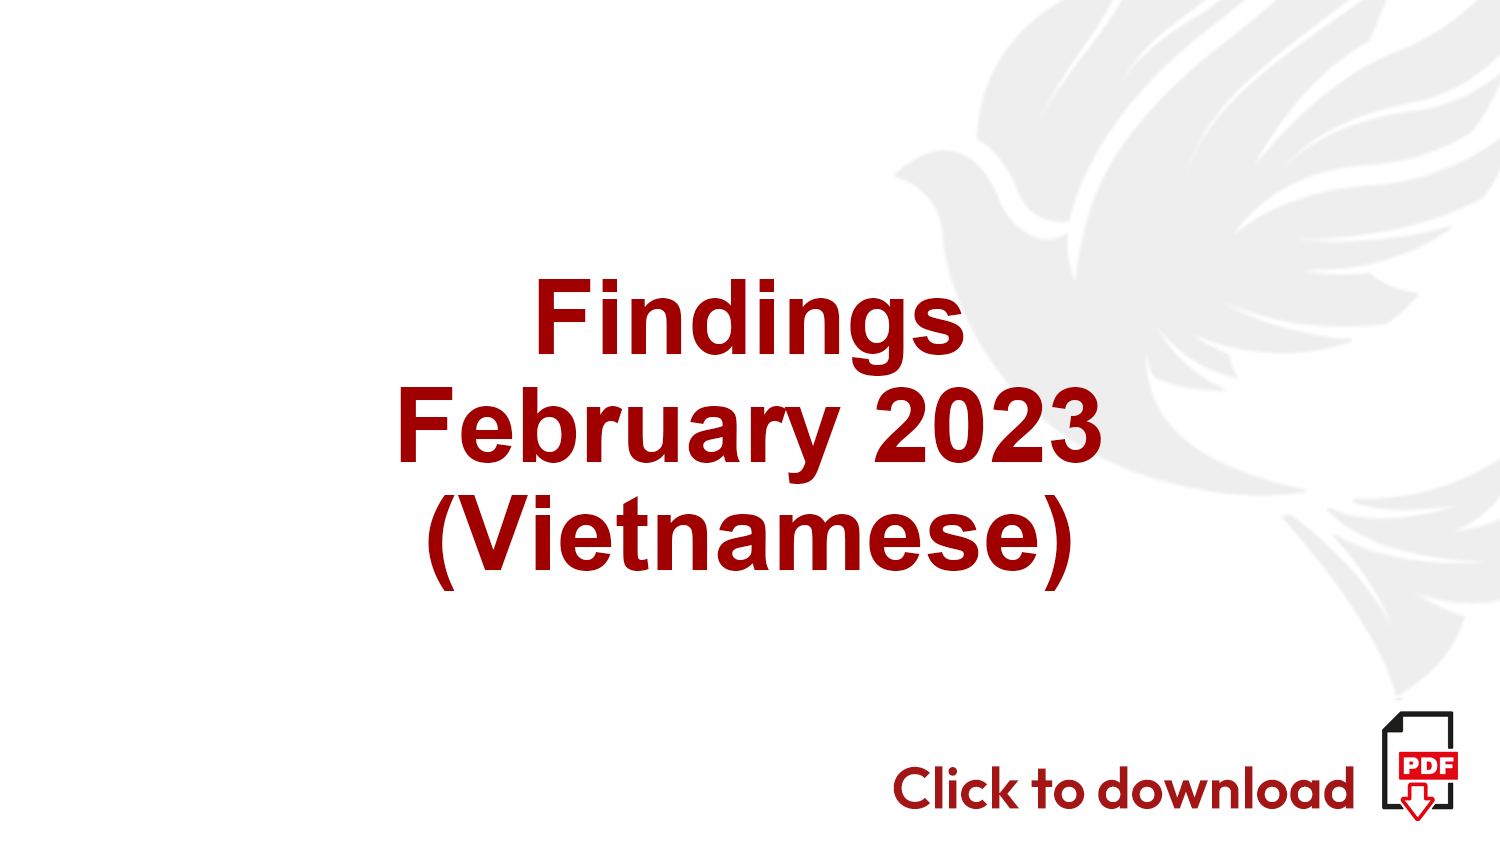 Findings for February 2023 in Vietnamese